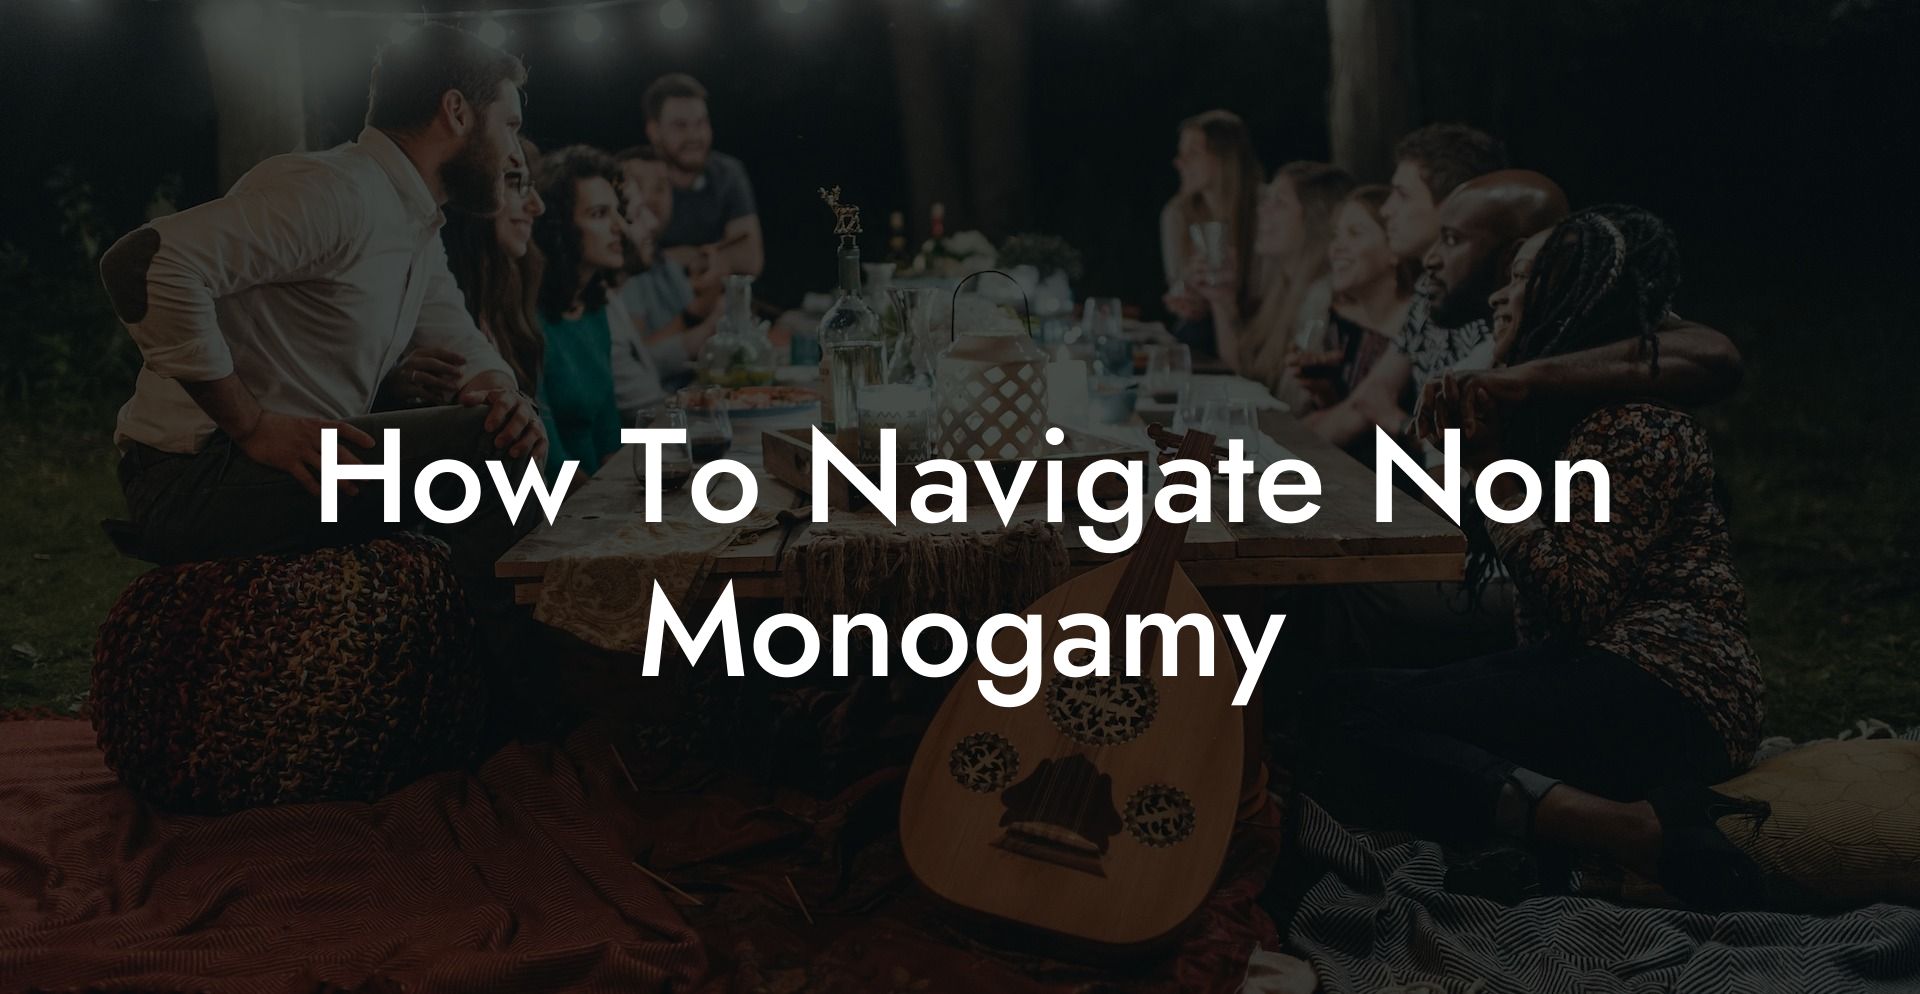 How To Navigate Non Monogamy